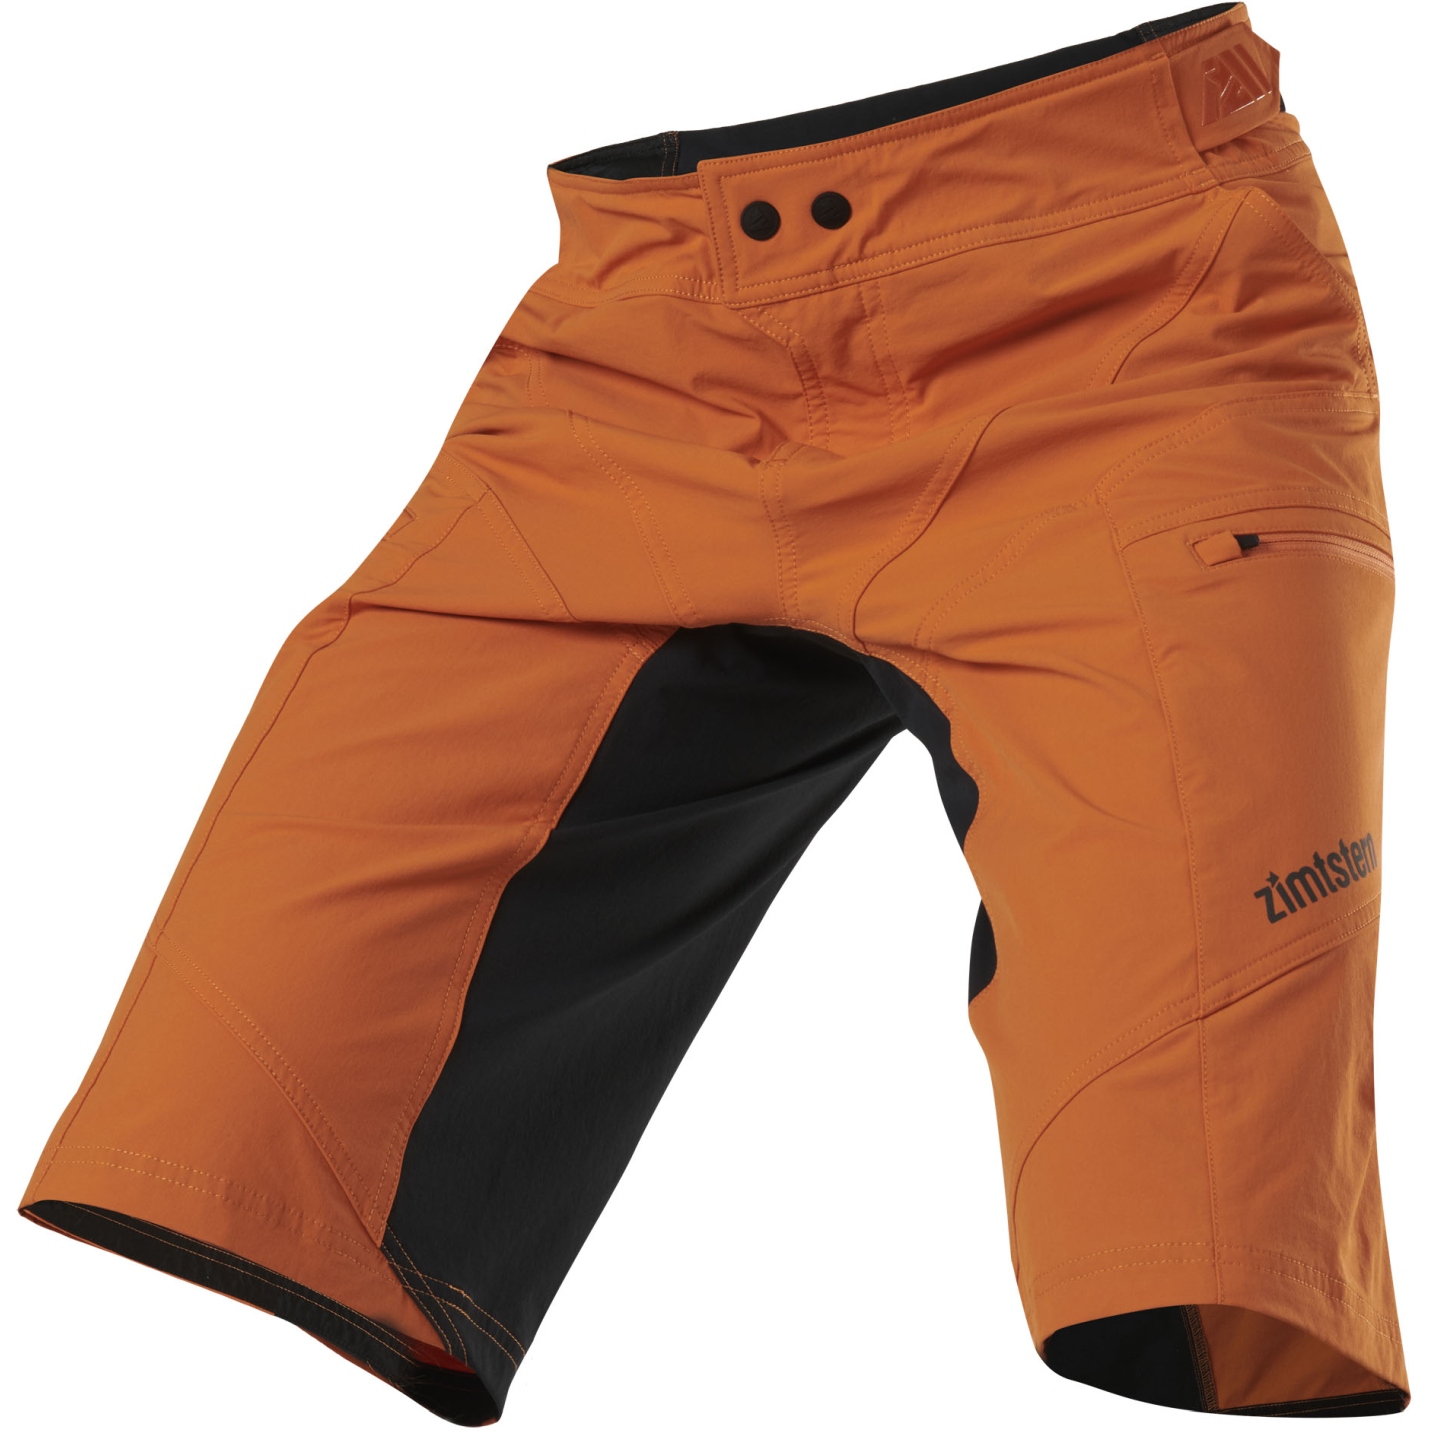 Productfoto van Zimtstern Trailstar Evo MTB-Shorts Heren - Burnt Orange/Pirate Black